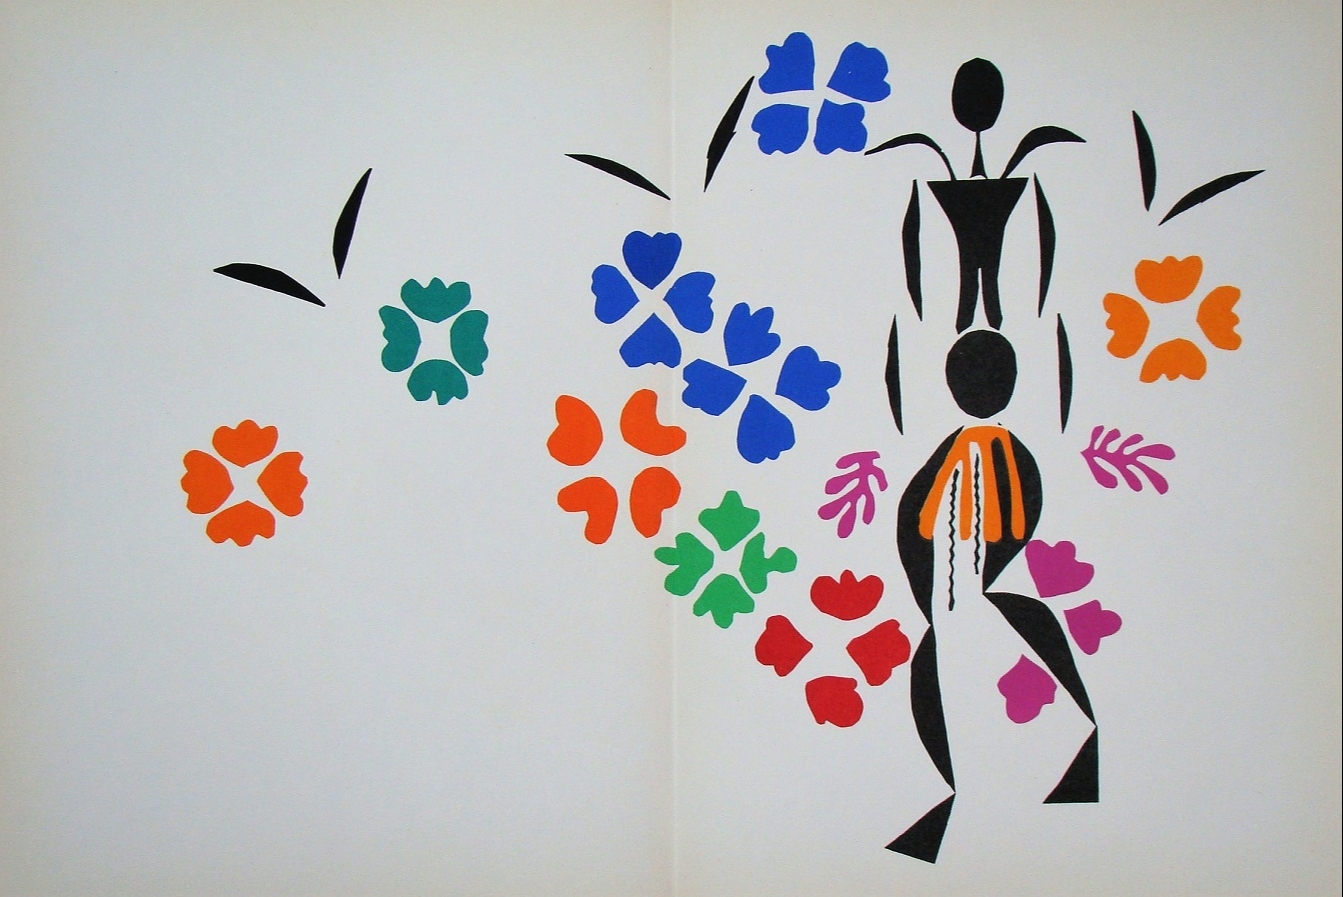 La négresse, 1958 by Henri Matisse, 1958